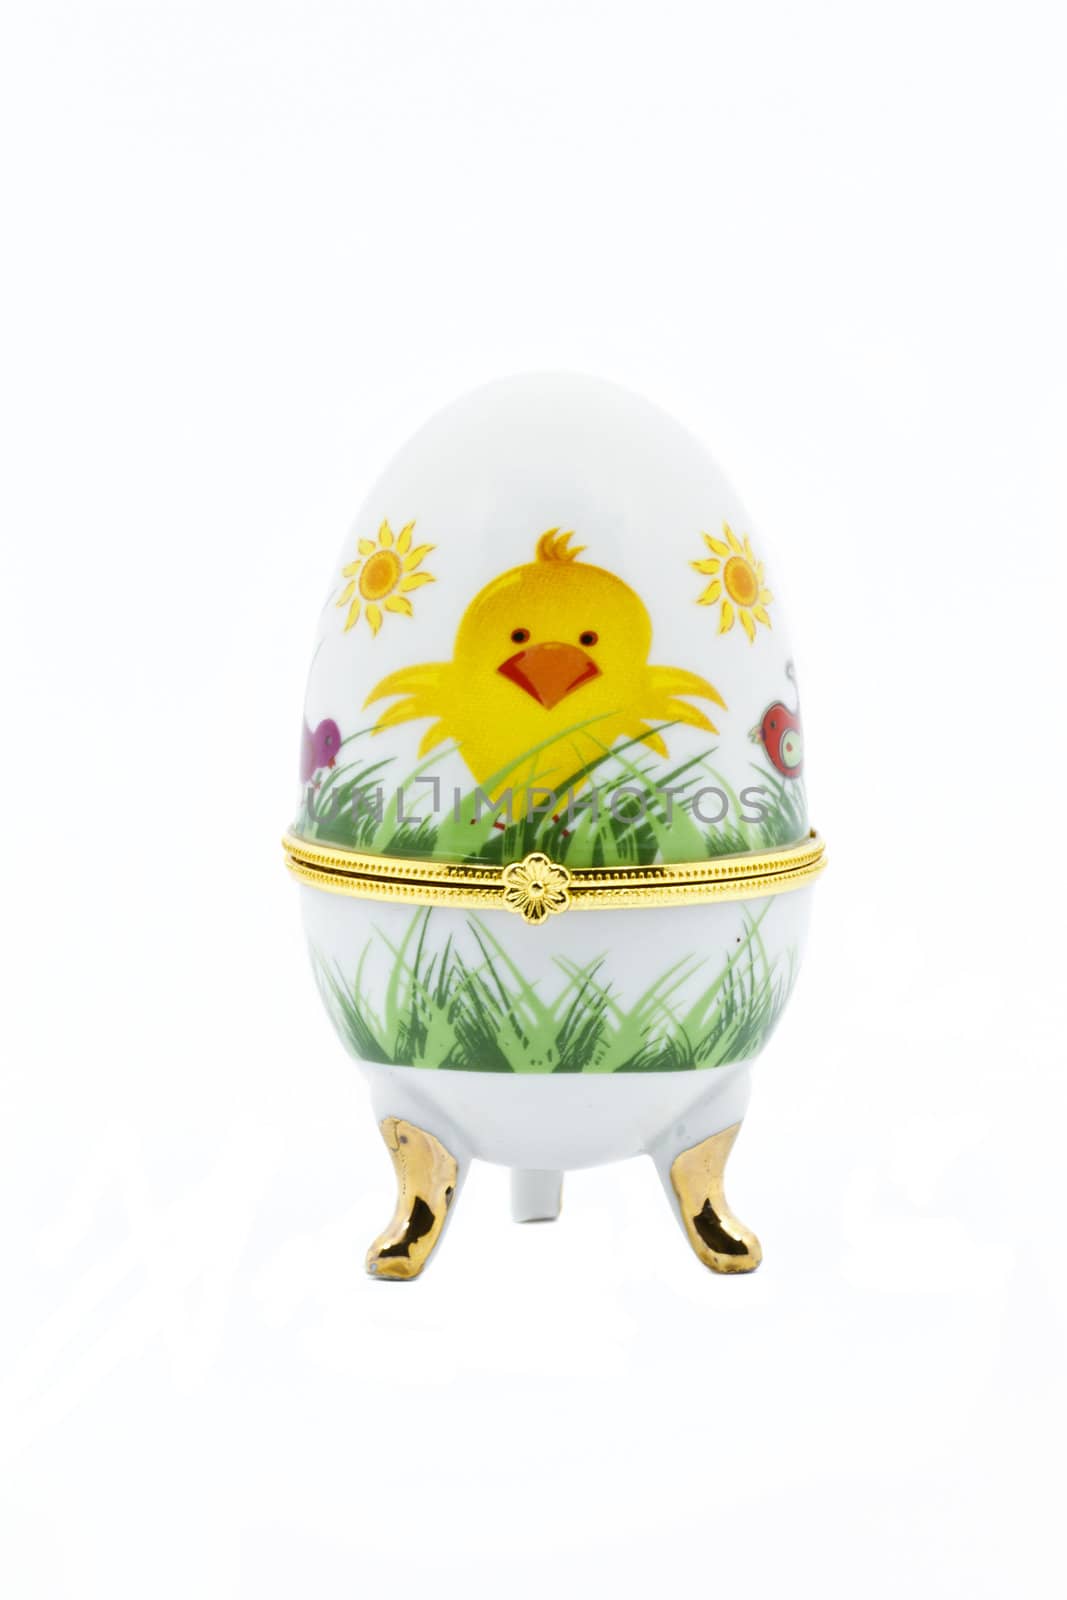 Easter Egg in Decorative Egg Holder isolated on white background